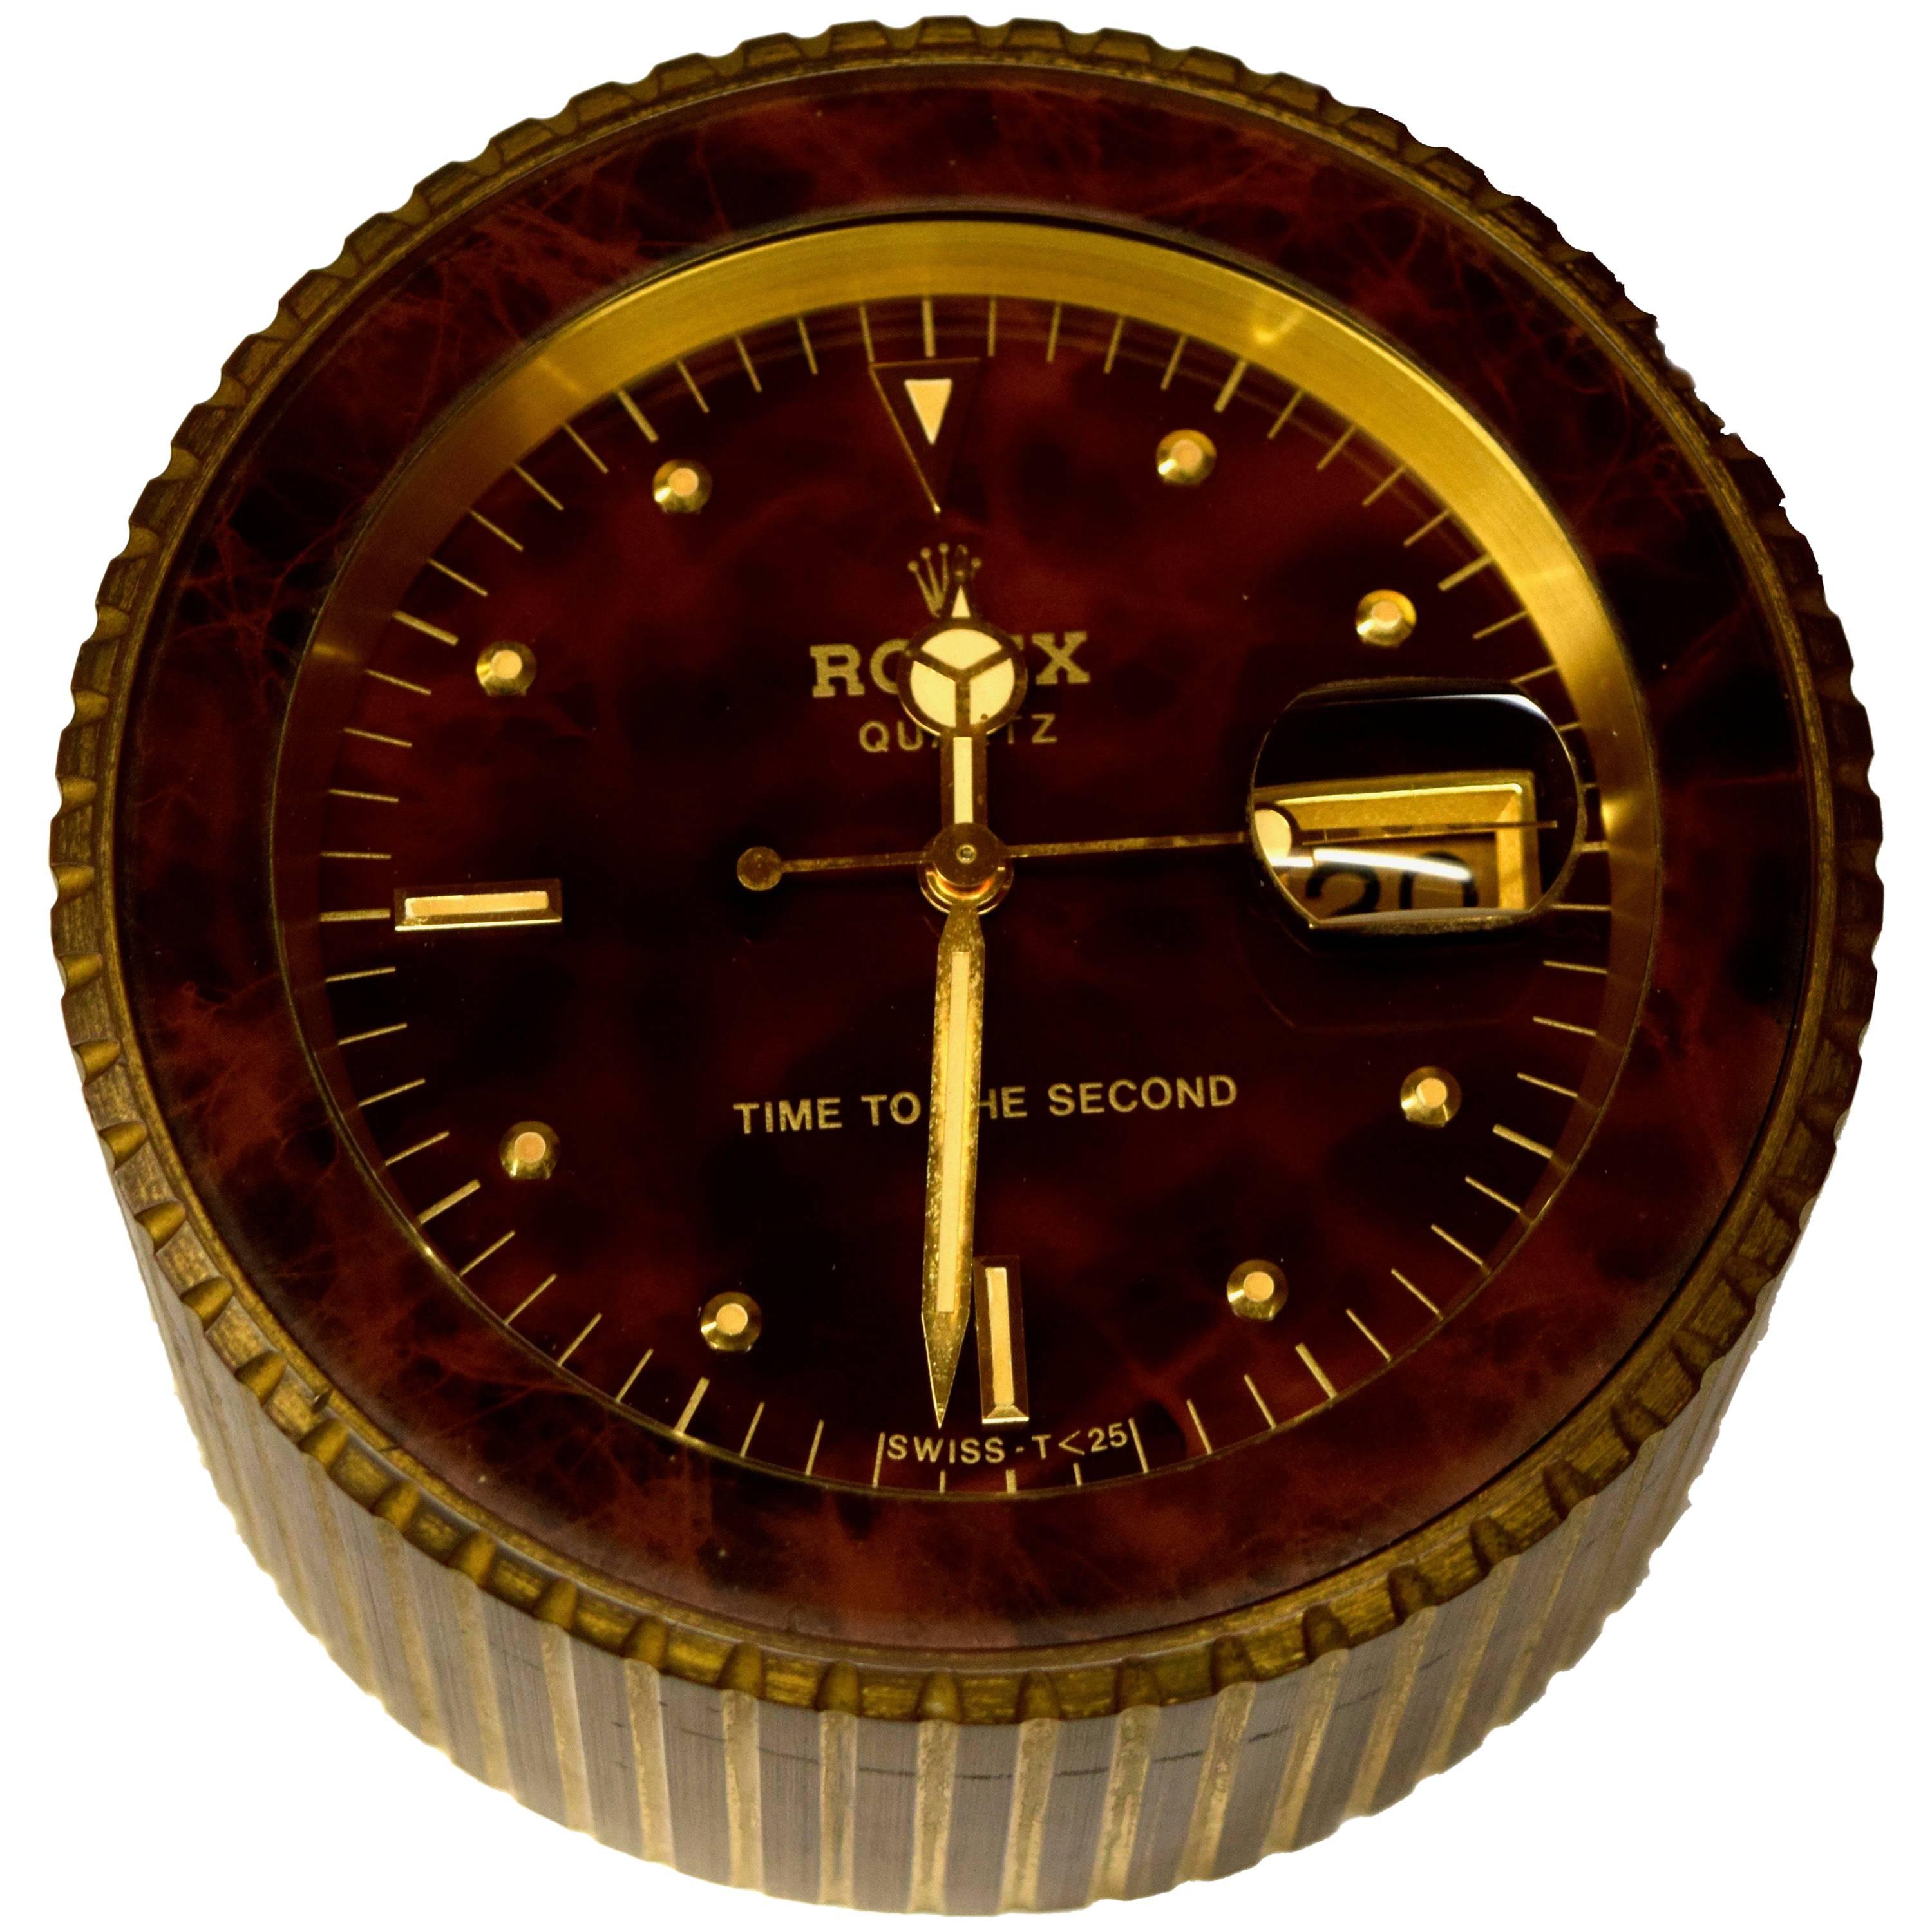 Rolex "Time To The Second" Quartz Desk Clock Ref 455 No 1227, Circa 1985  For Sale at 1stDibs